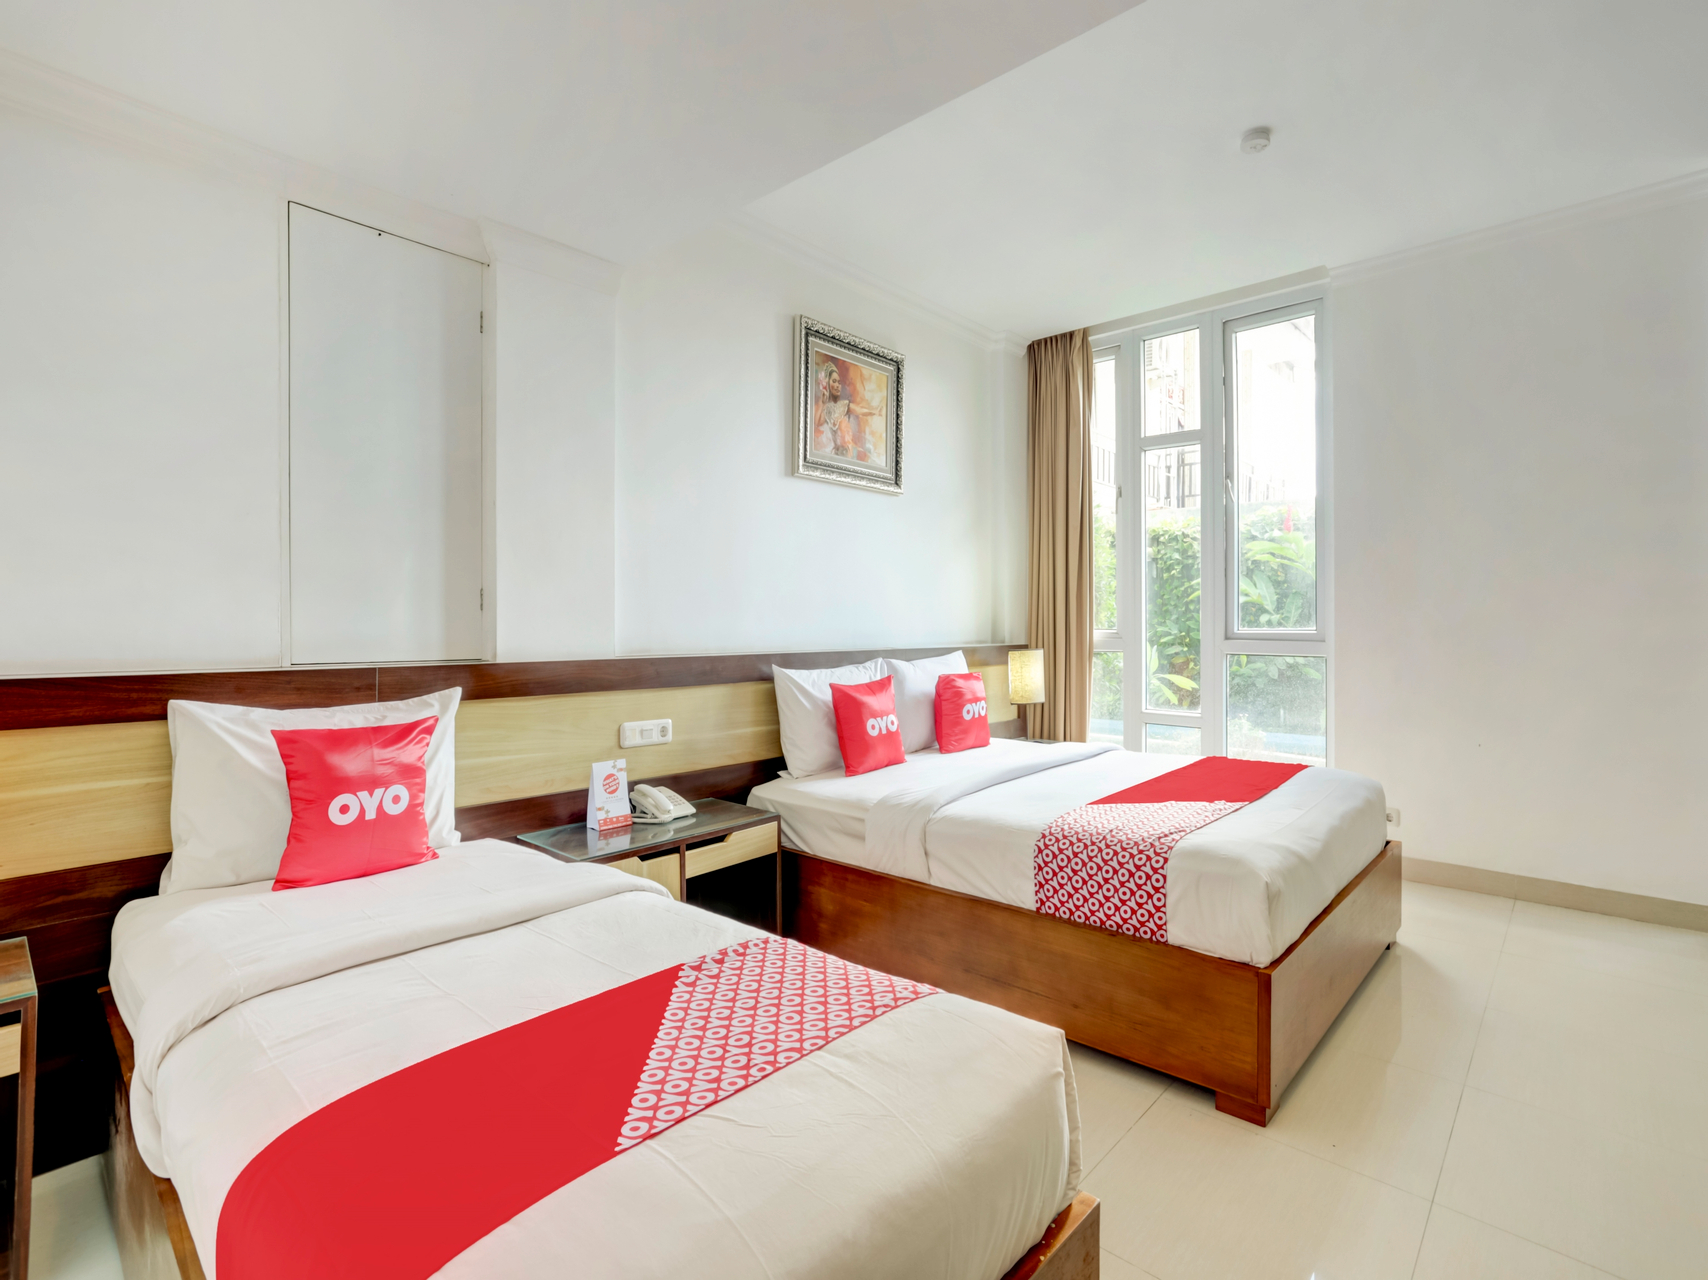 Bedroom 1, OYO 3850 Bali Kepundung Hotel (tutup sementara), Denpasar